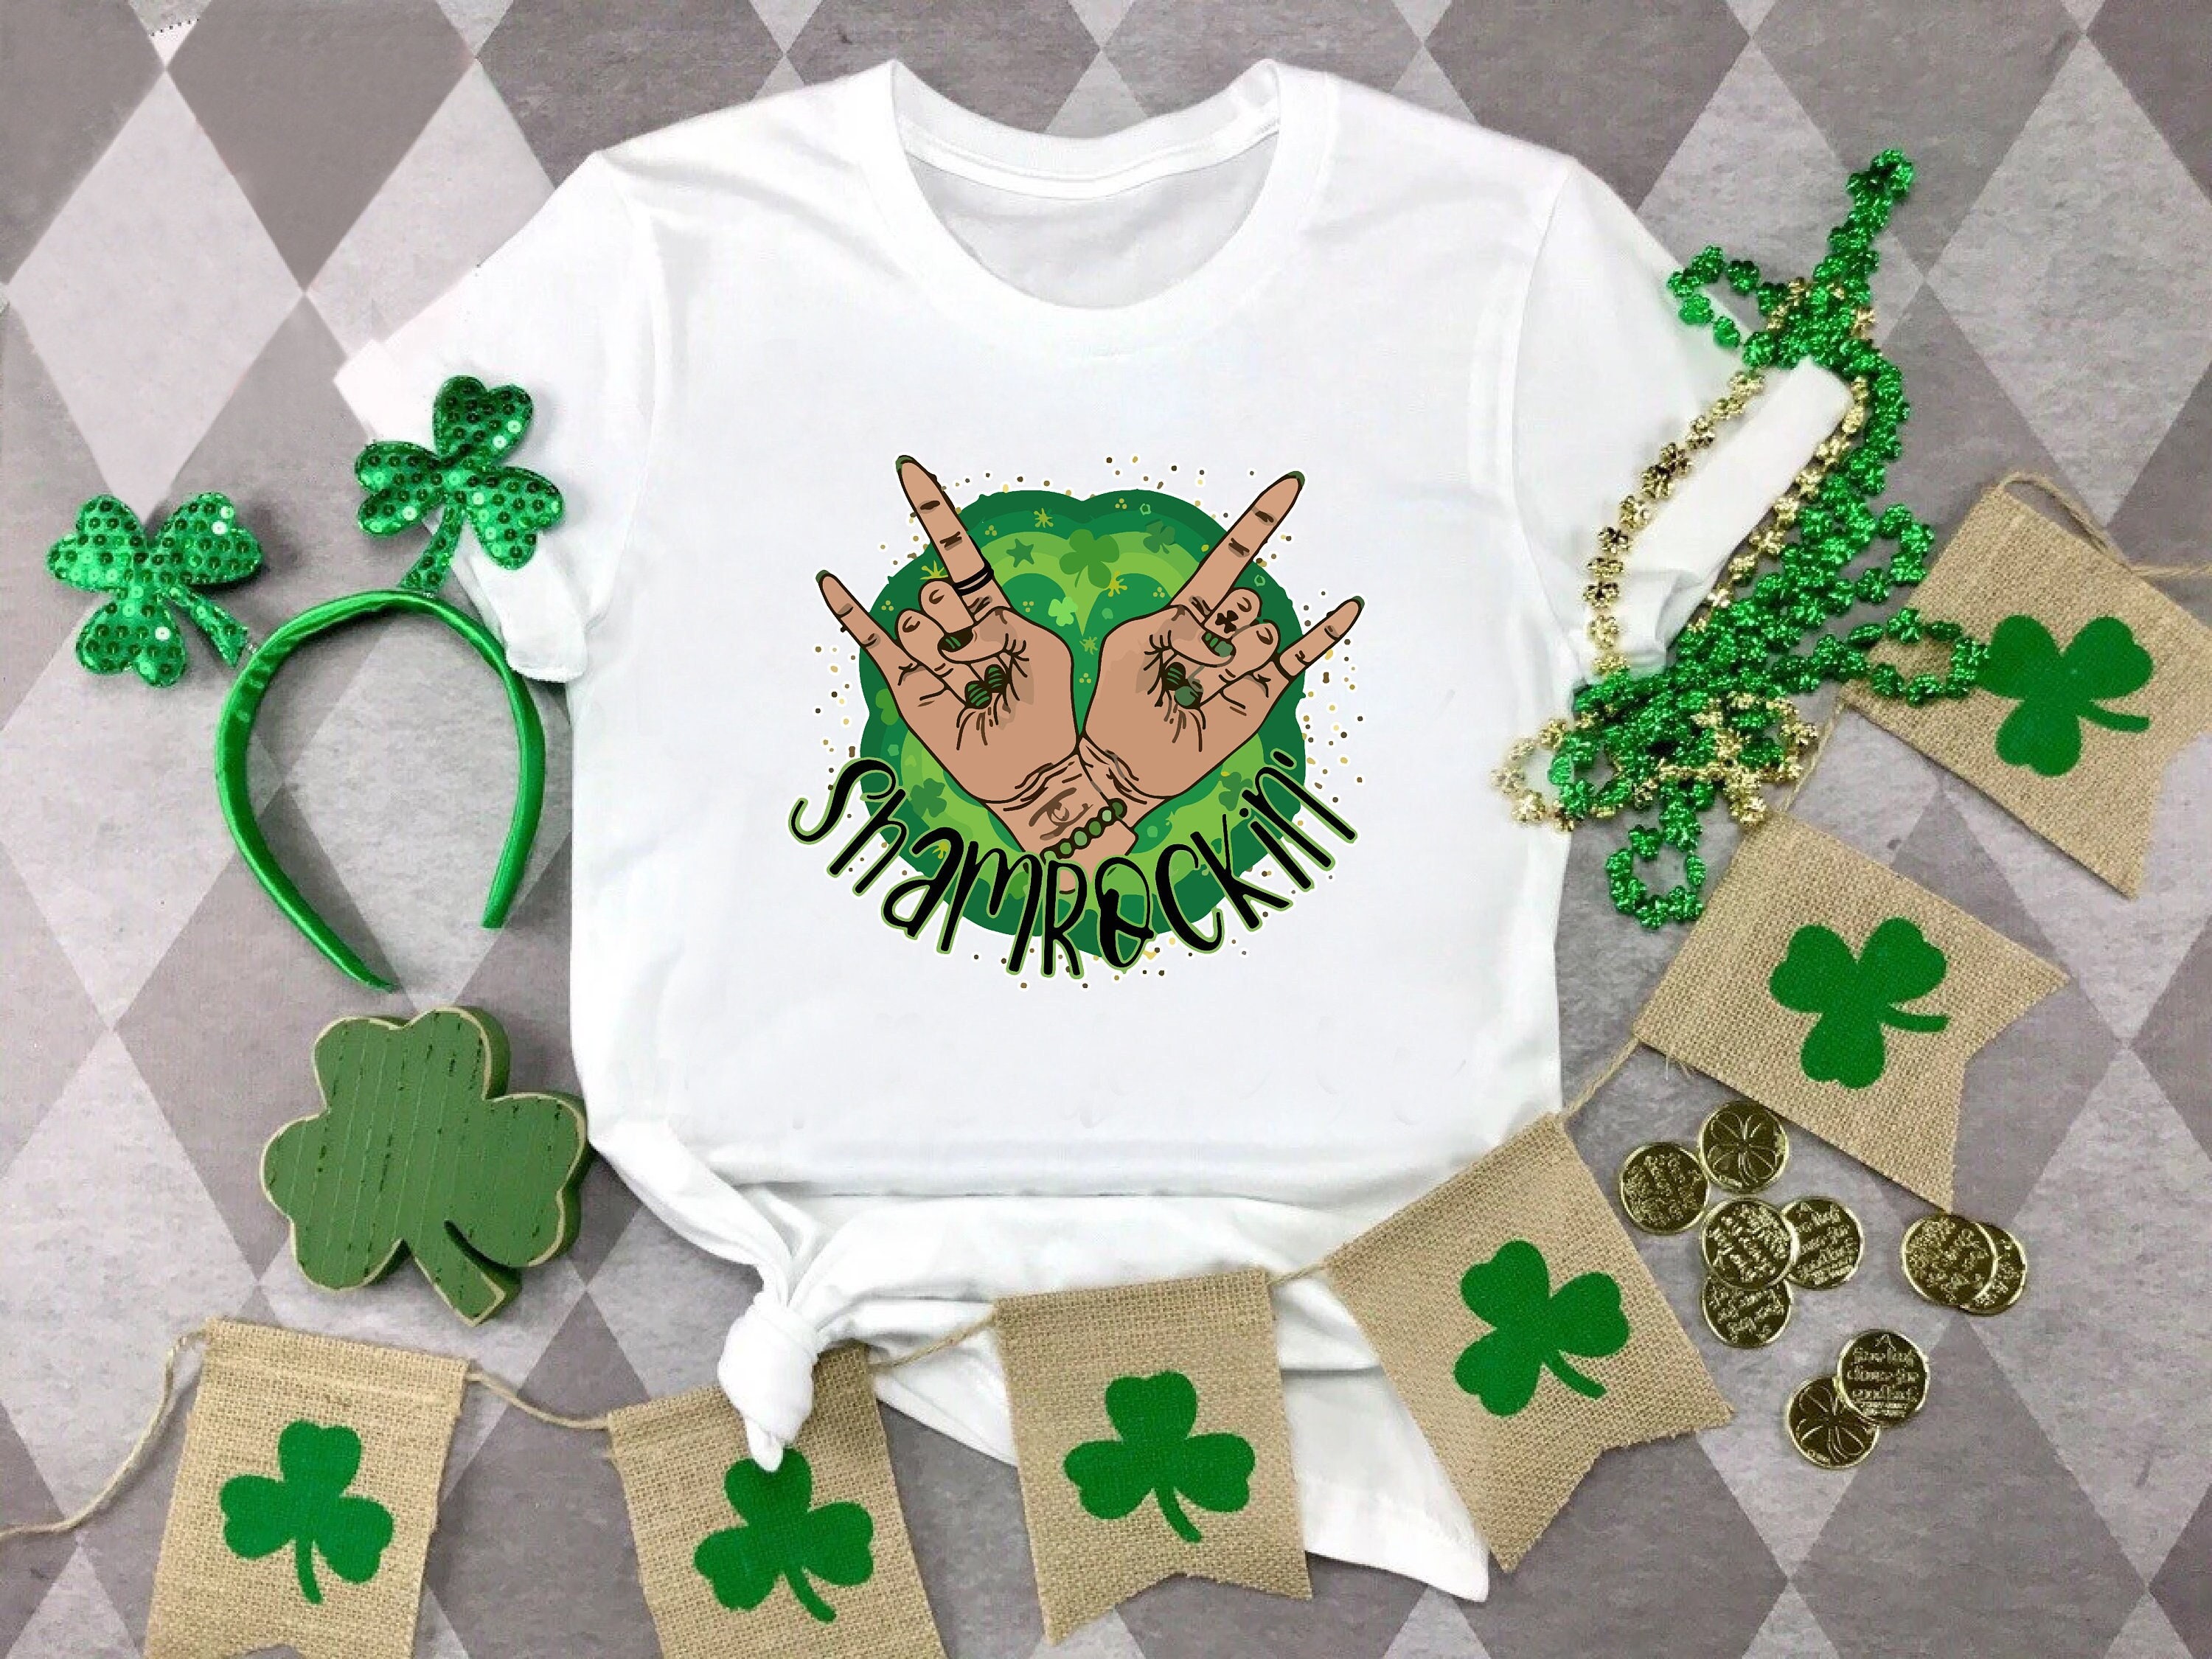 Discover St. Patrick's Day Shirt,Shamrockin Shirt,Shamrock And Roll Shirt,Irish Green